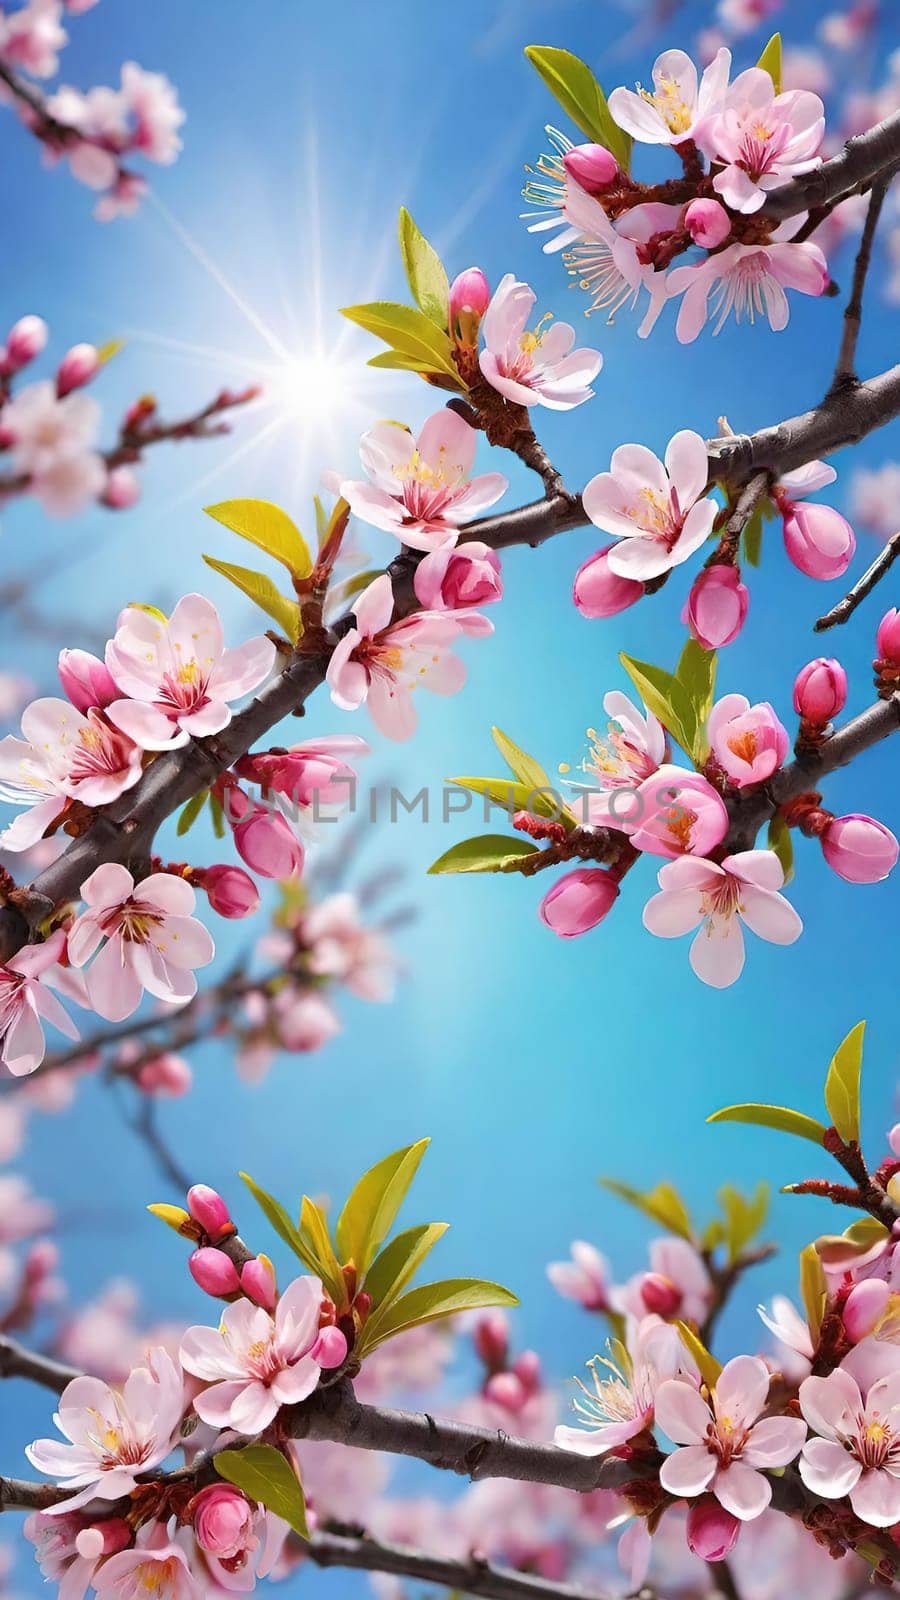 Cherry blossom in spring, pink flowers on blue sky background. by yilmazsavaskandag